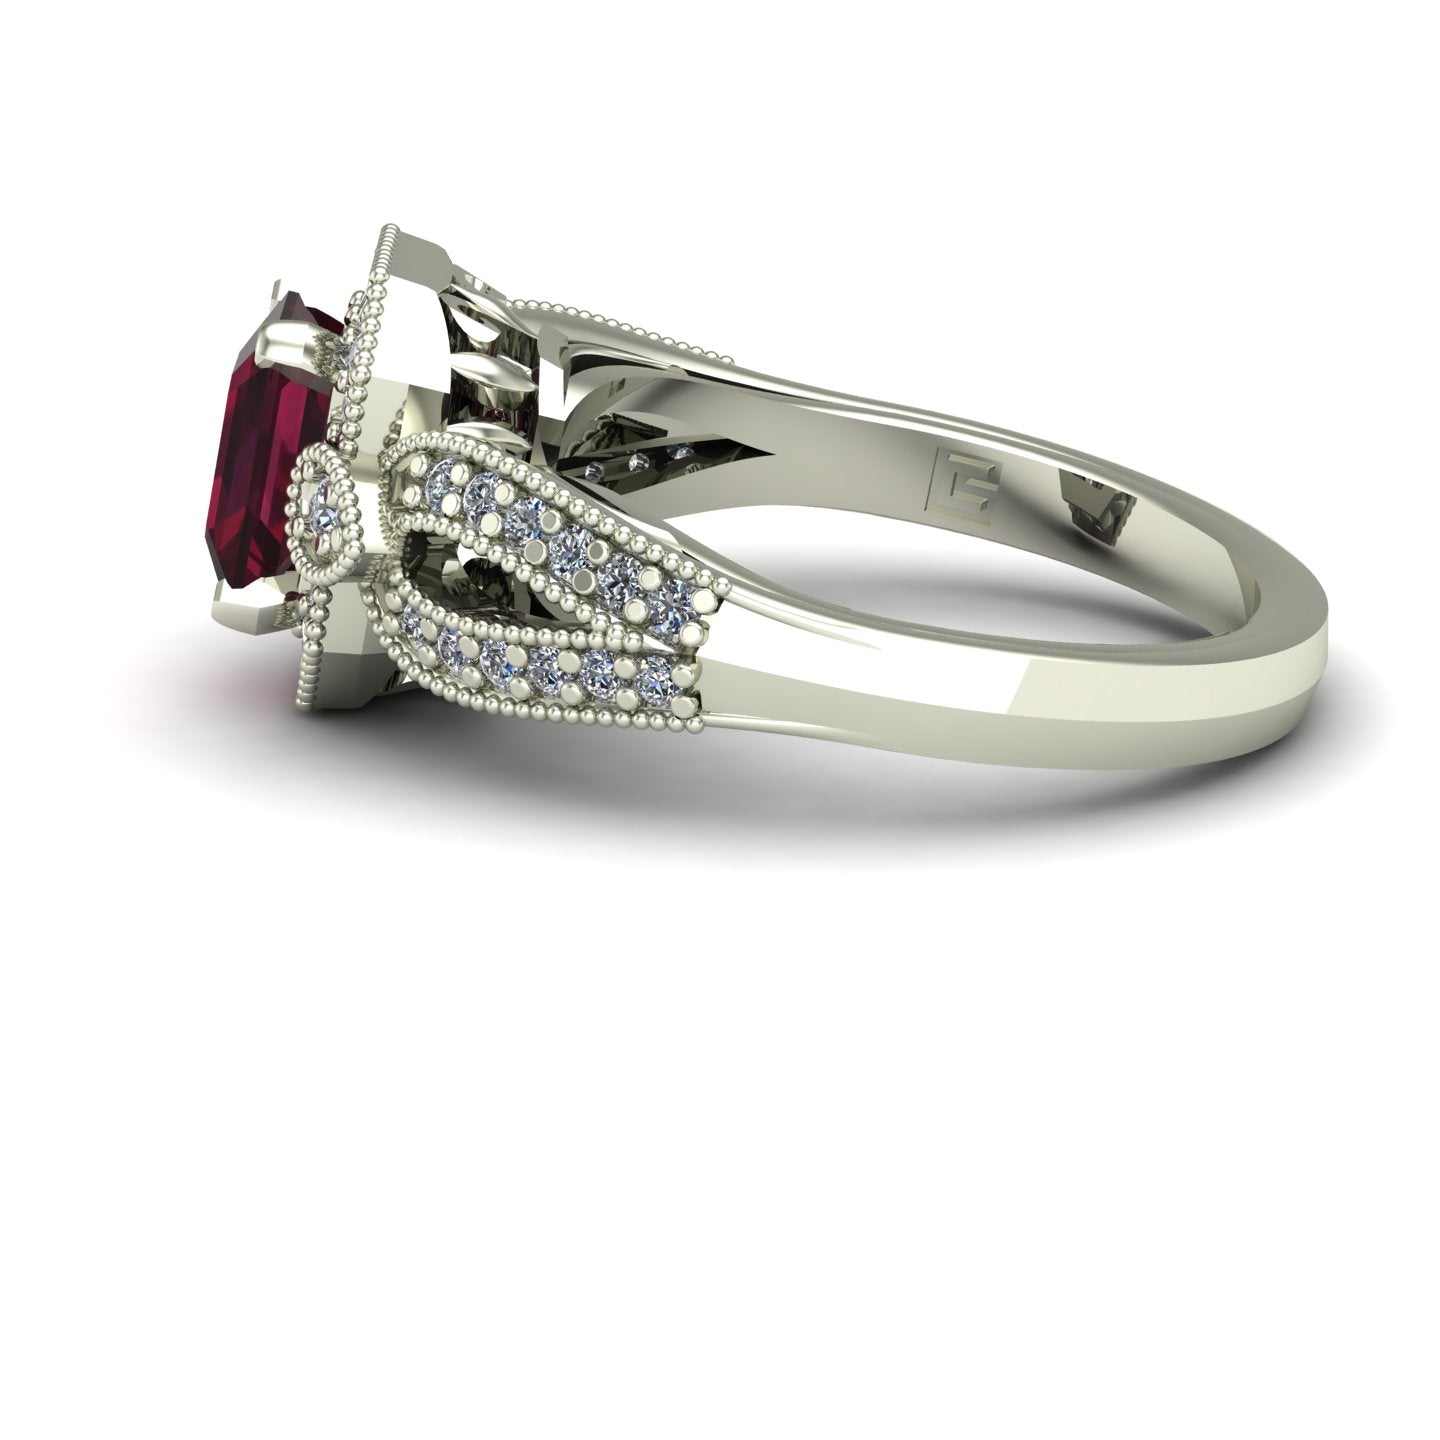 emerald cut rhodolite garnet and diamond art deco inspired ring in 14k white gold - Charles Babb Designs - side view